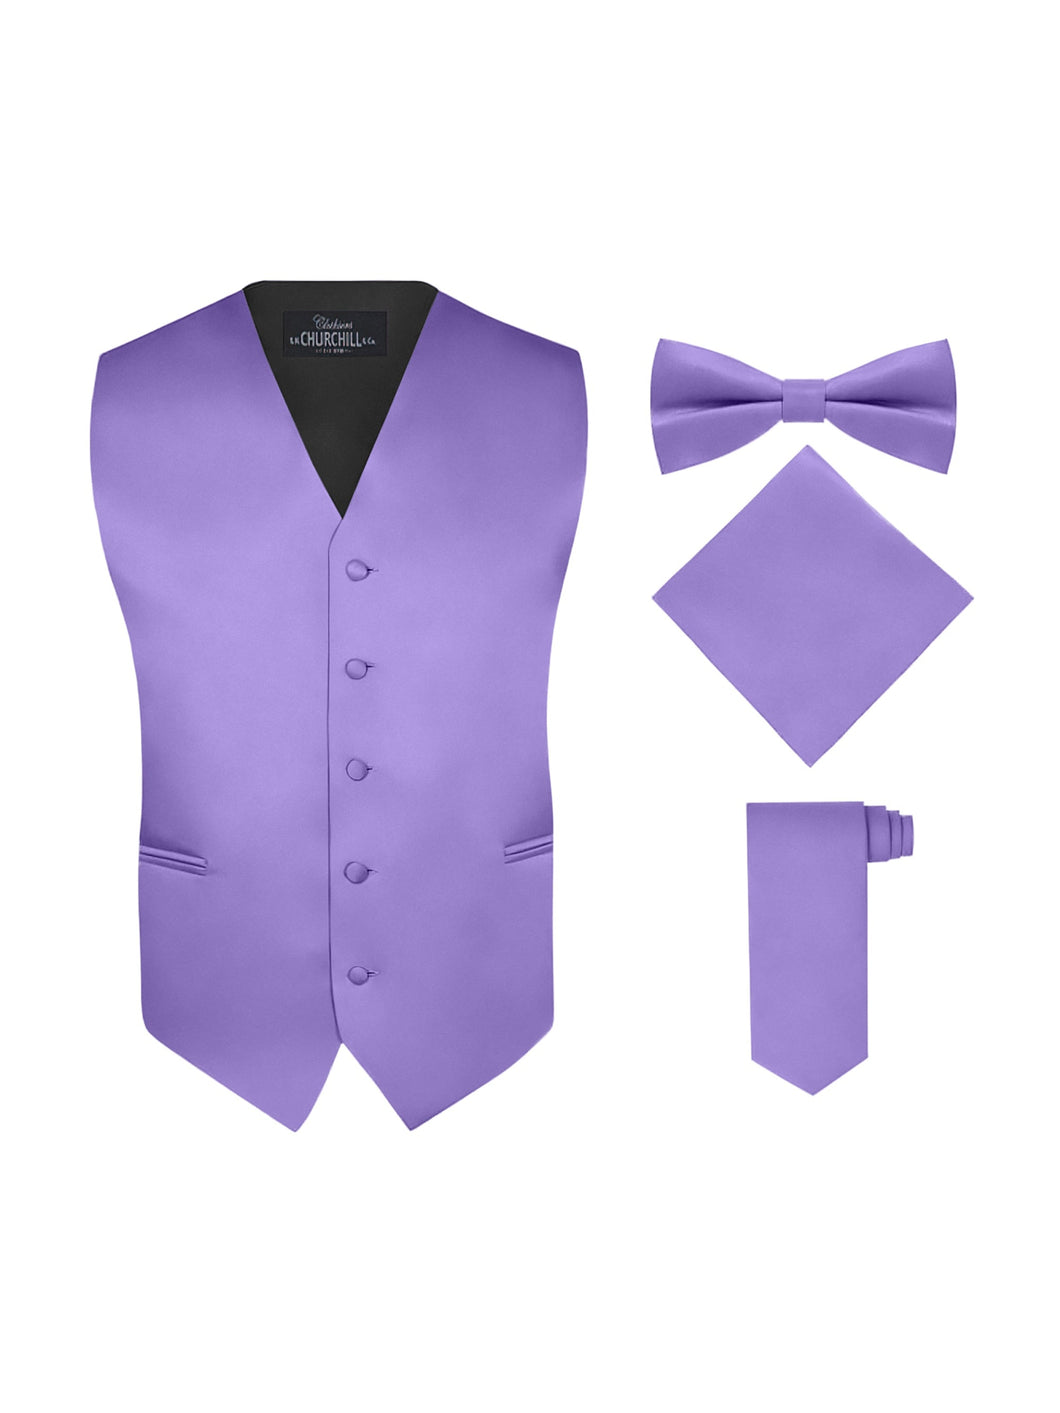 S.H. Churchill & Co. Men's 4 Piece Light Purple Vest Set, with Bow Tie, Neck Tie & Pocket Hankie